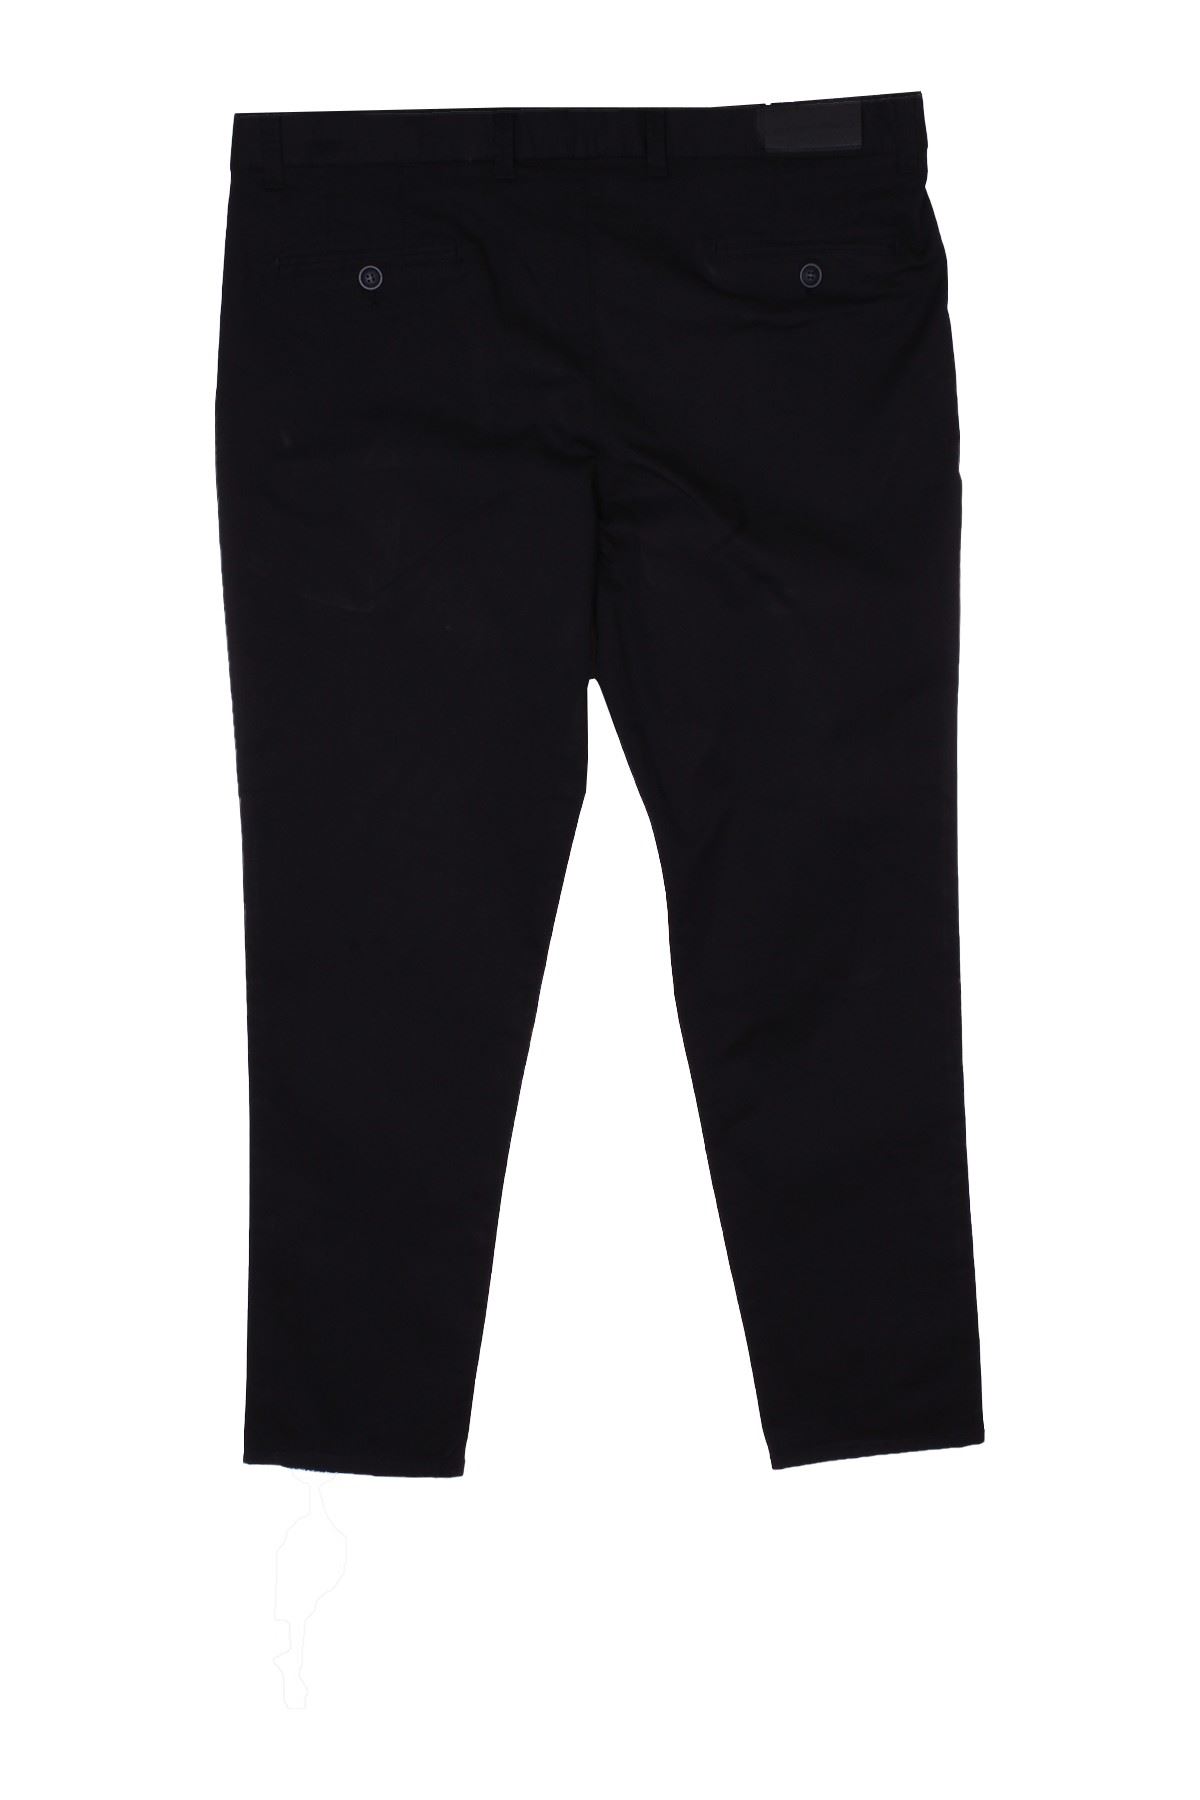 Giyinsen Erkek Siyah Kanvas Pantolon - 23KA50000003